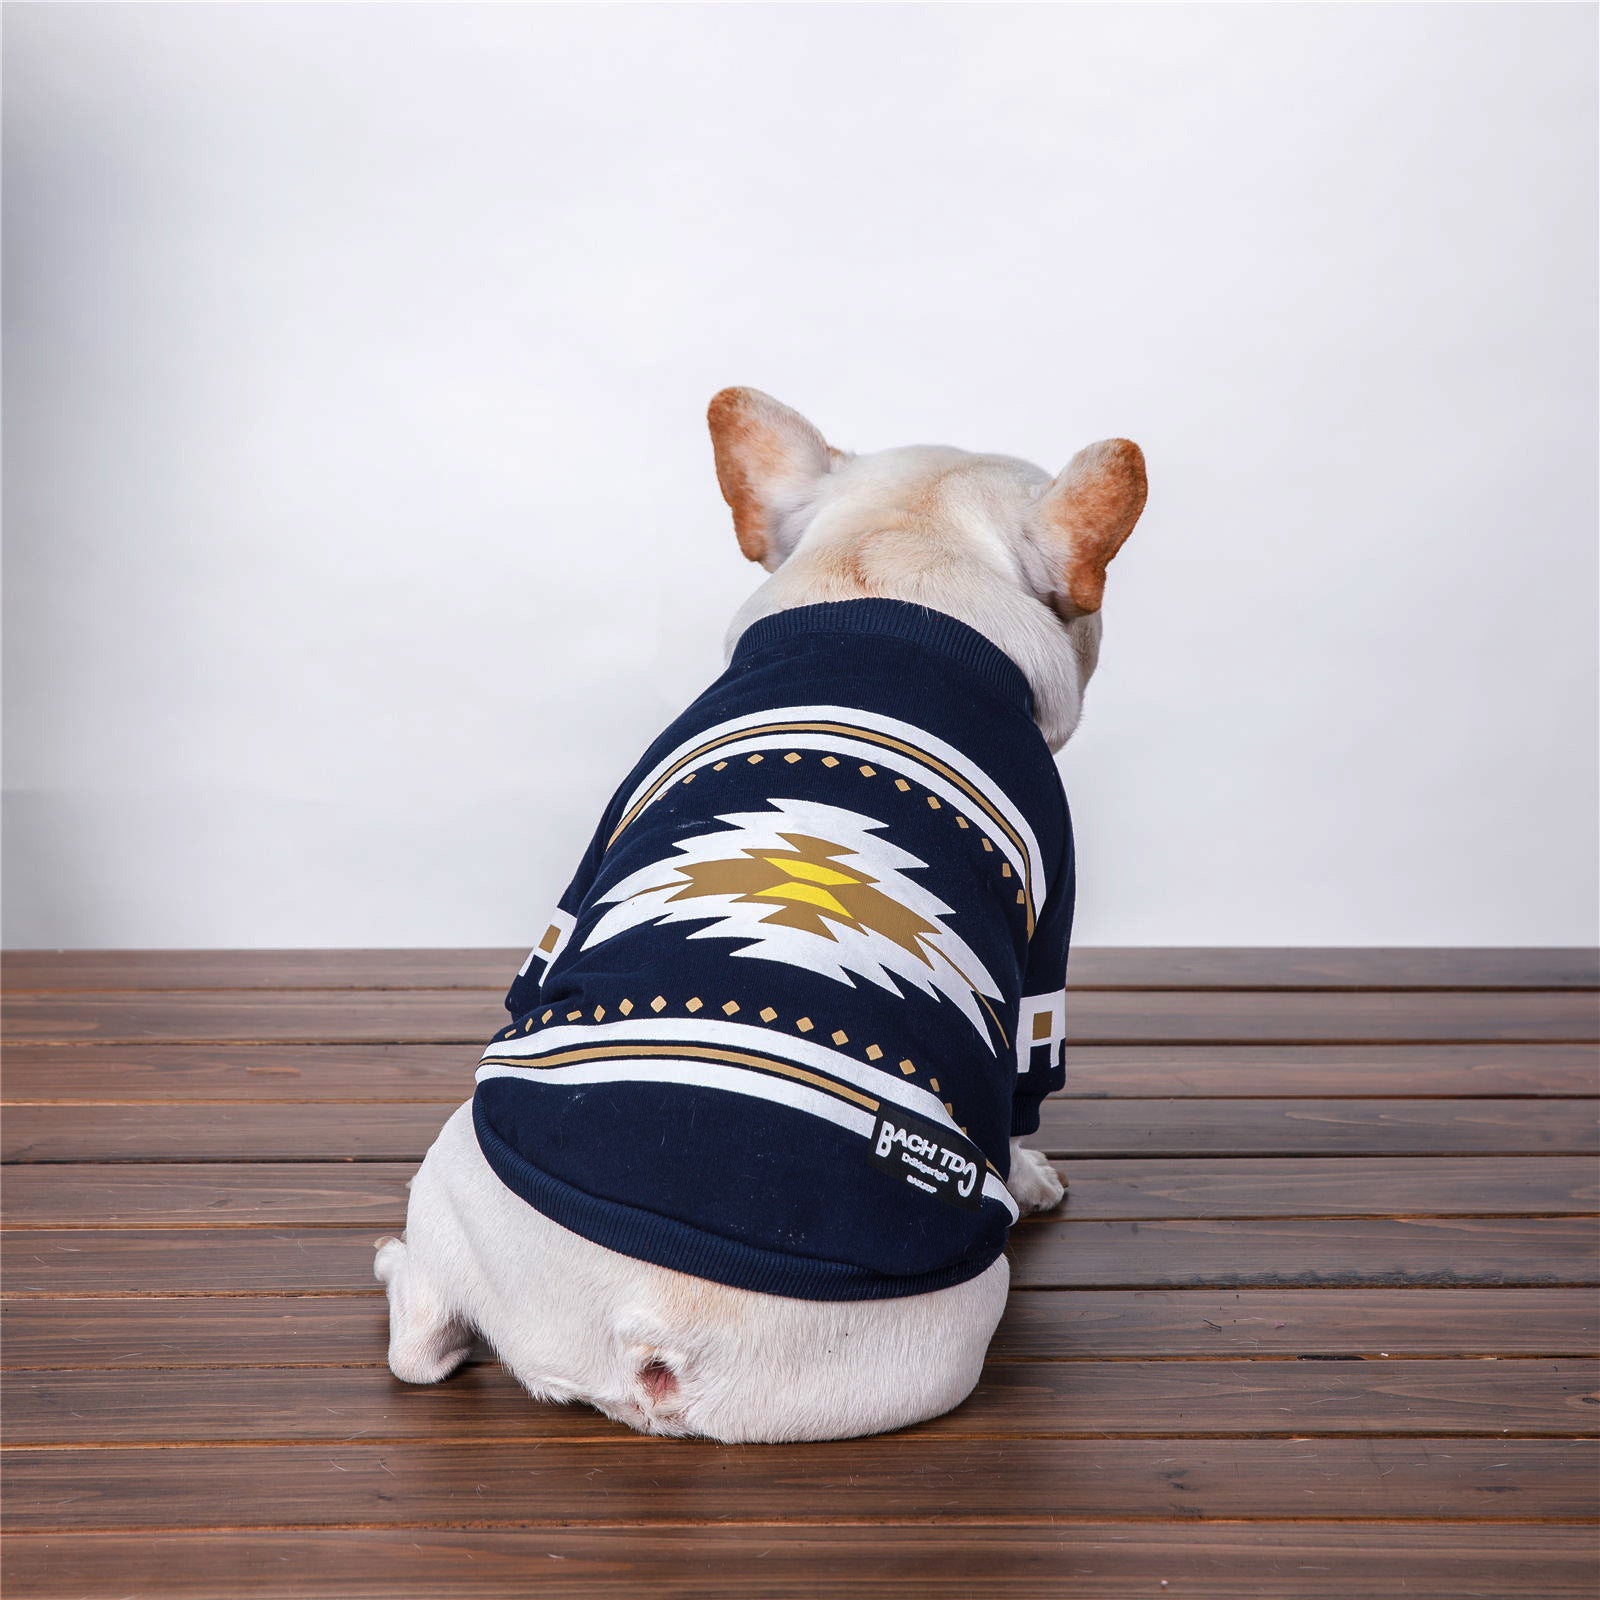 Dog cotton sweater